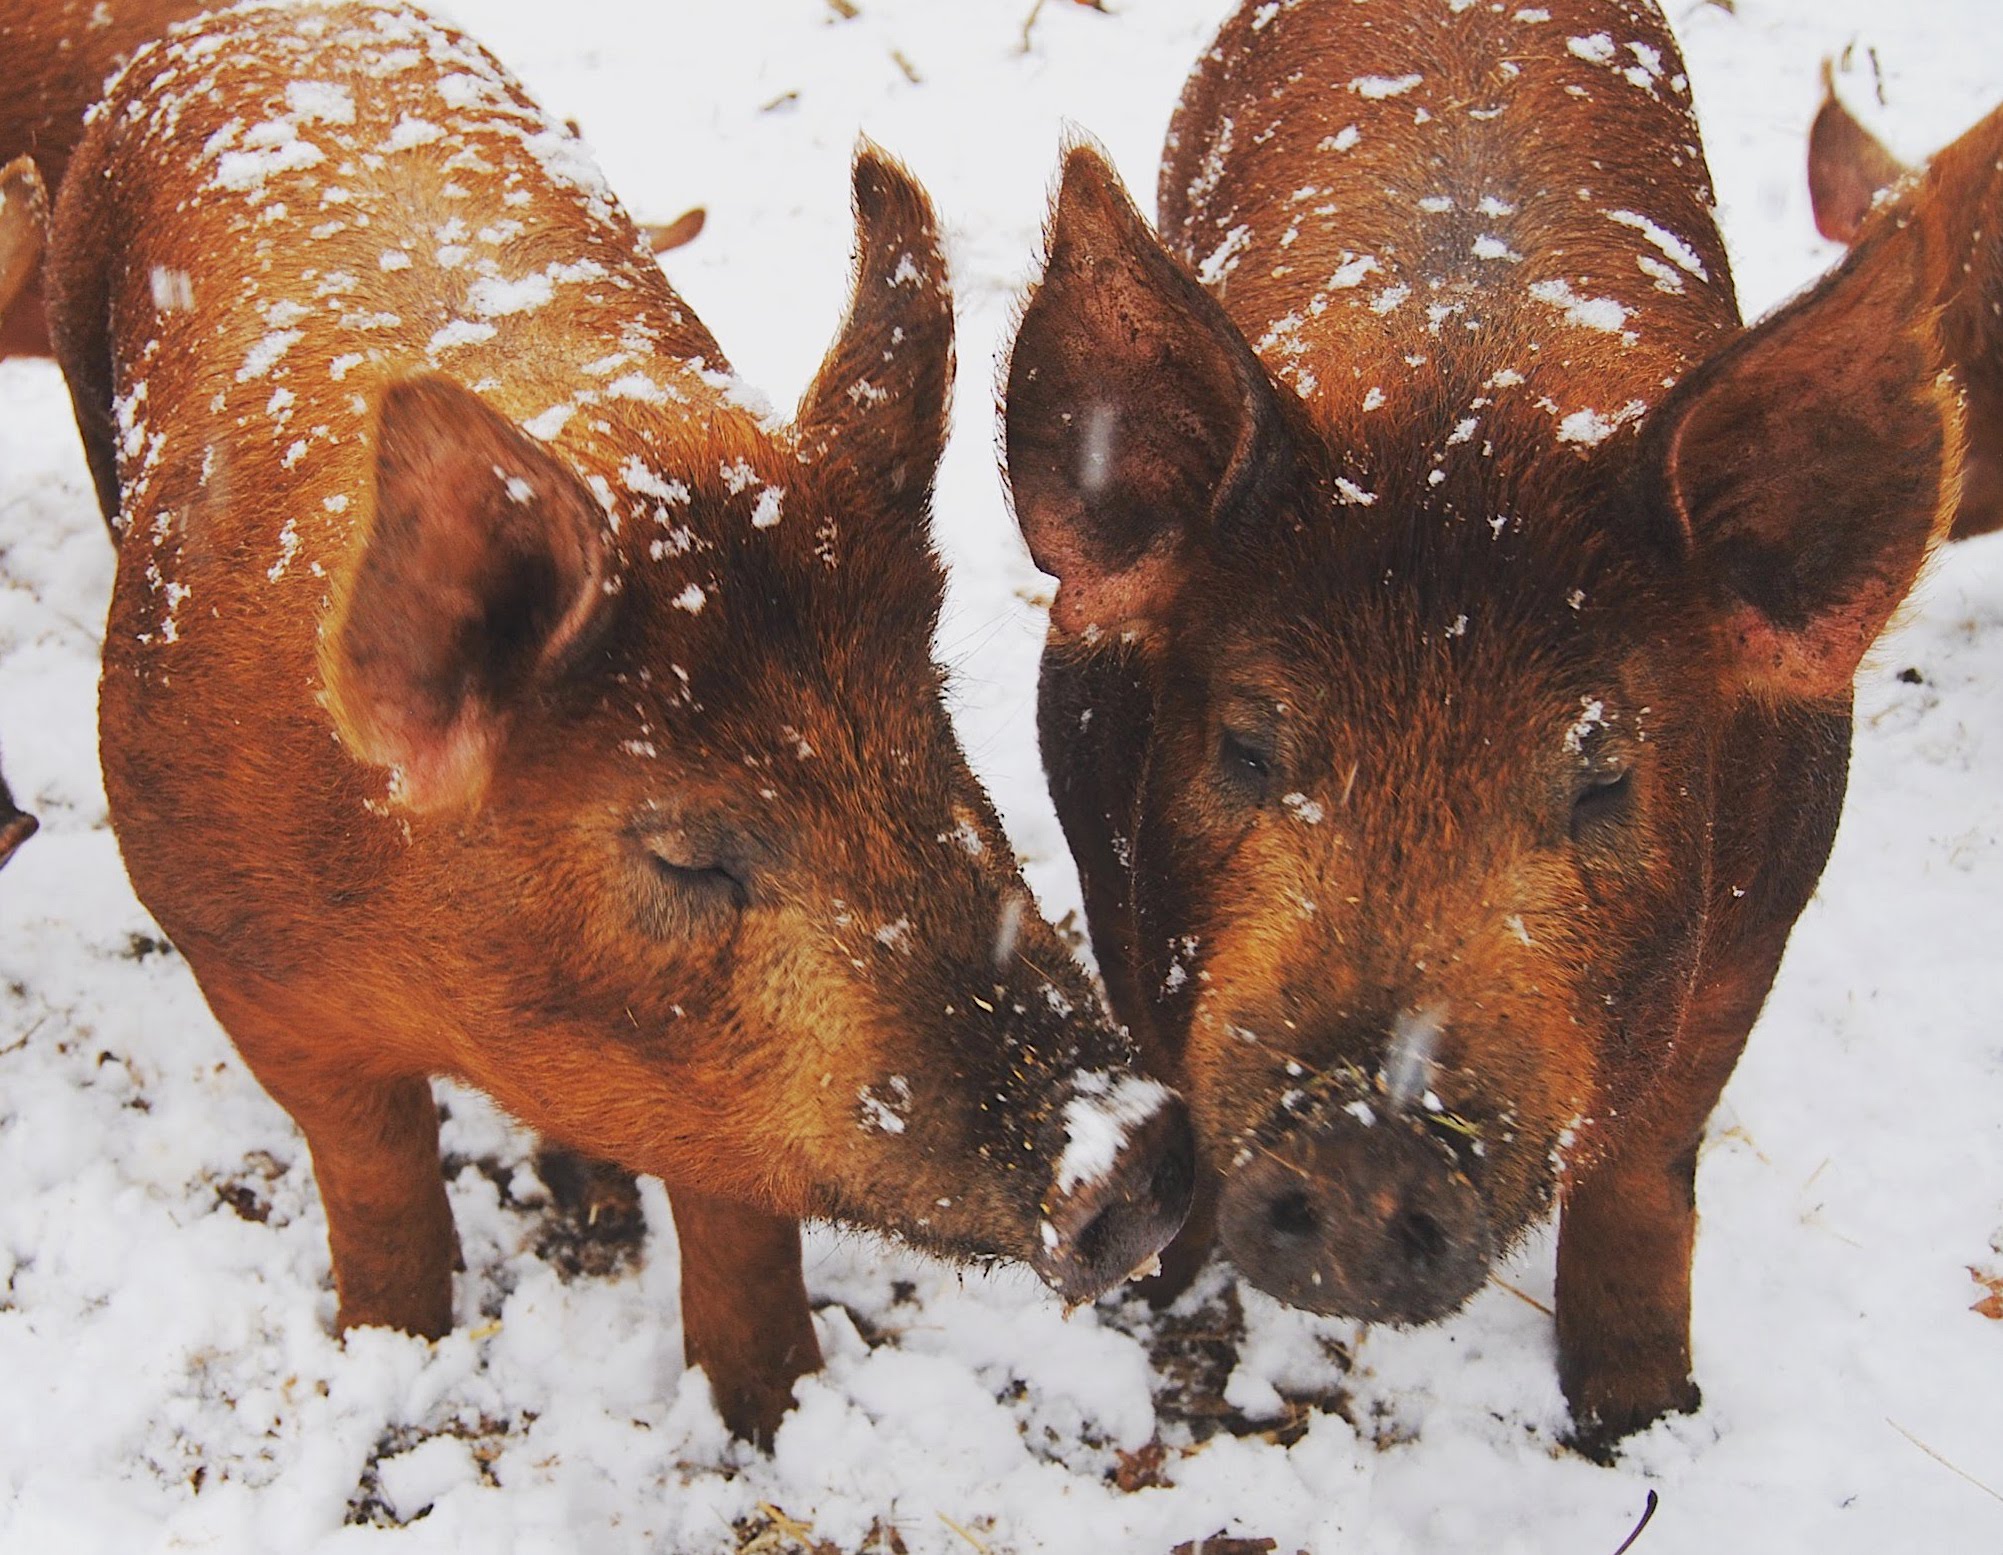 Snowy Pig Kiss